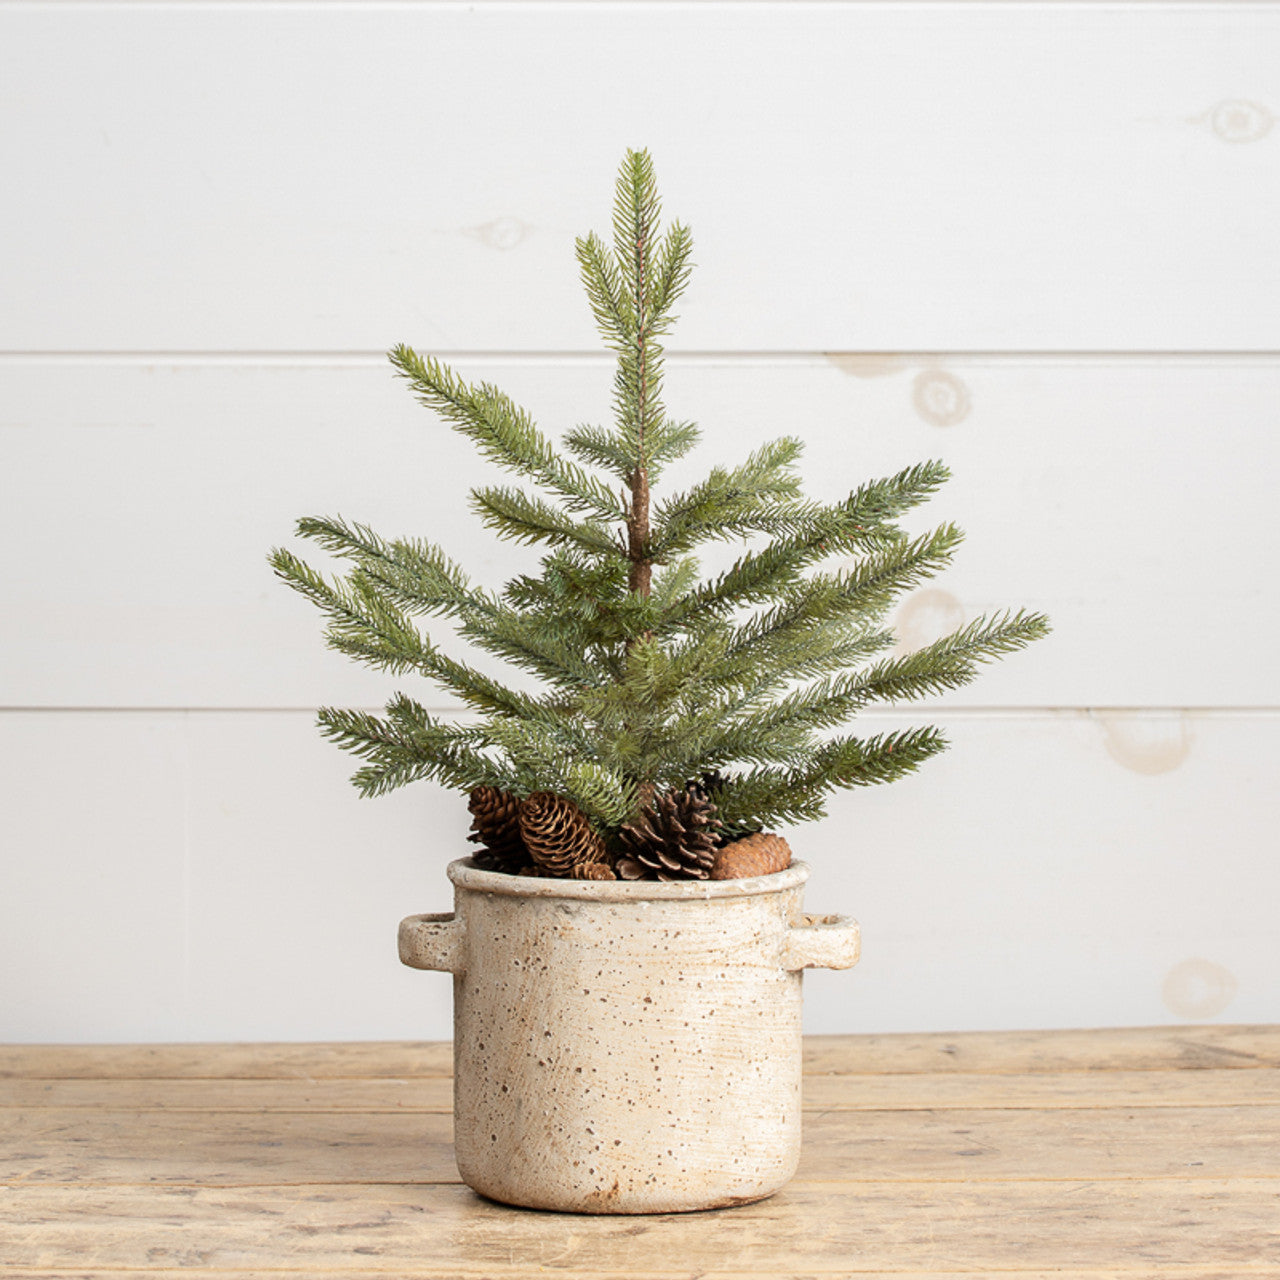 21" Pine Tree in Ceramic Pot w/ Pinecones